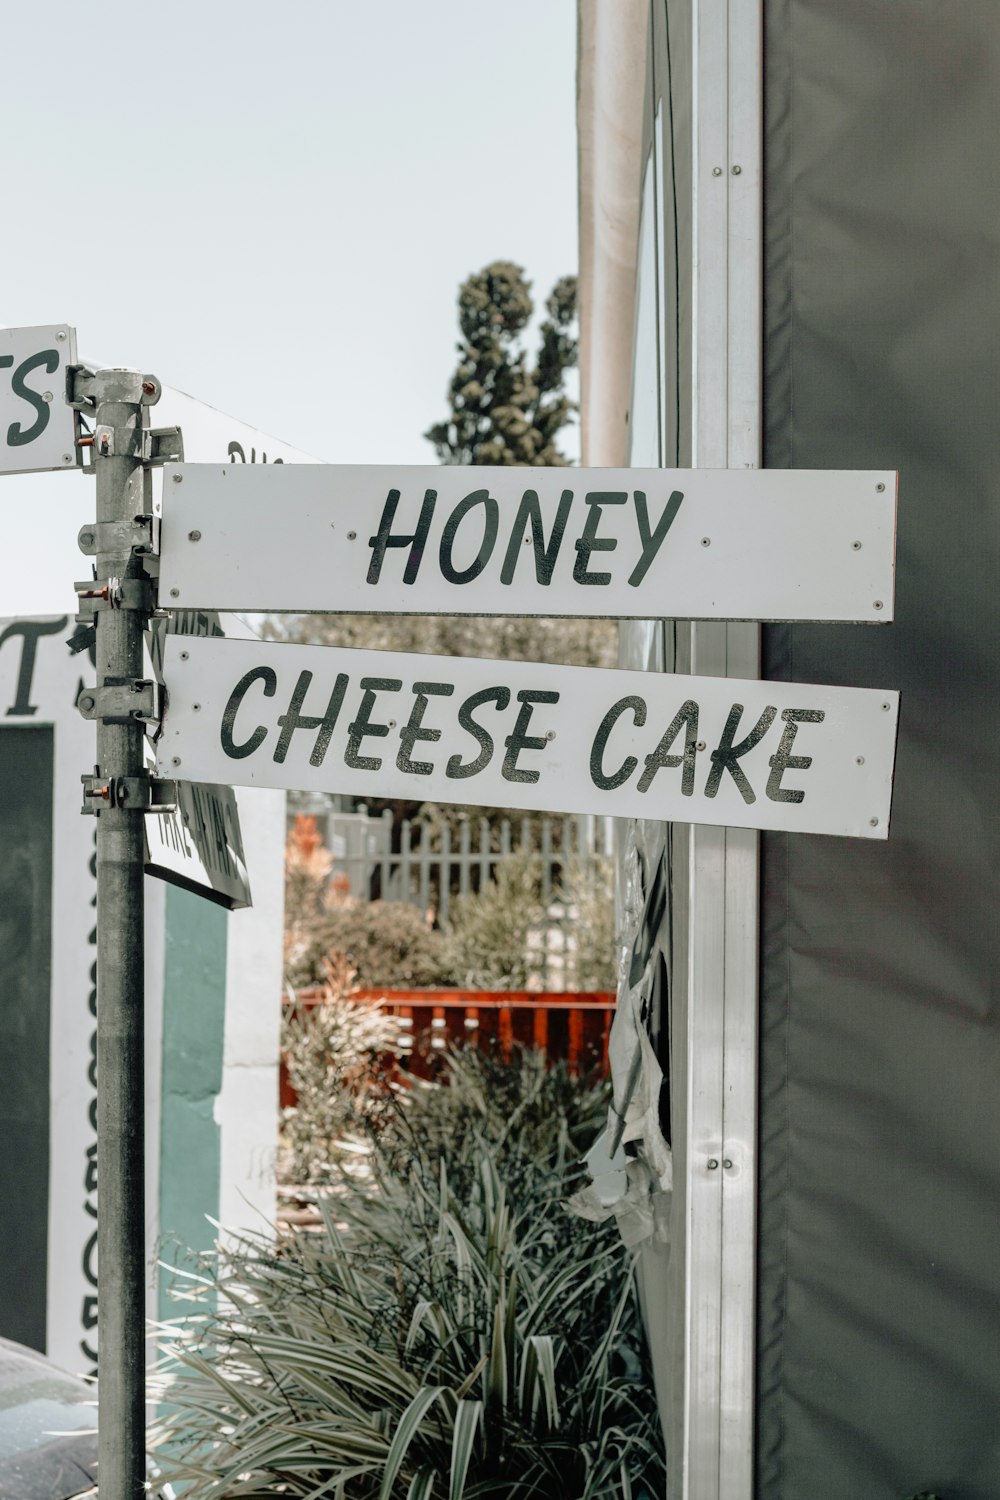 Honey and Cheese Cake signage